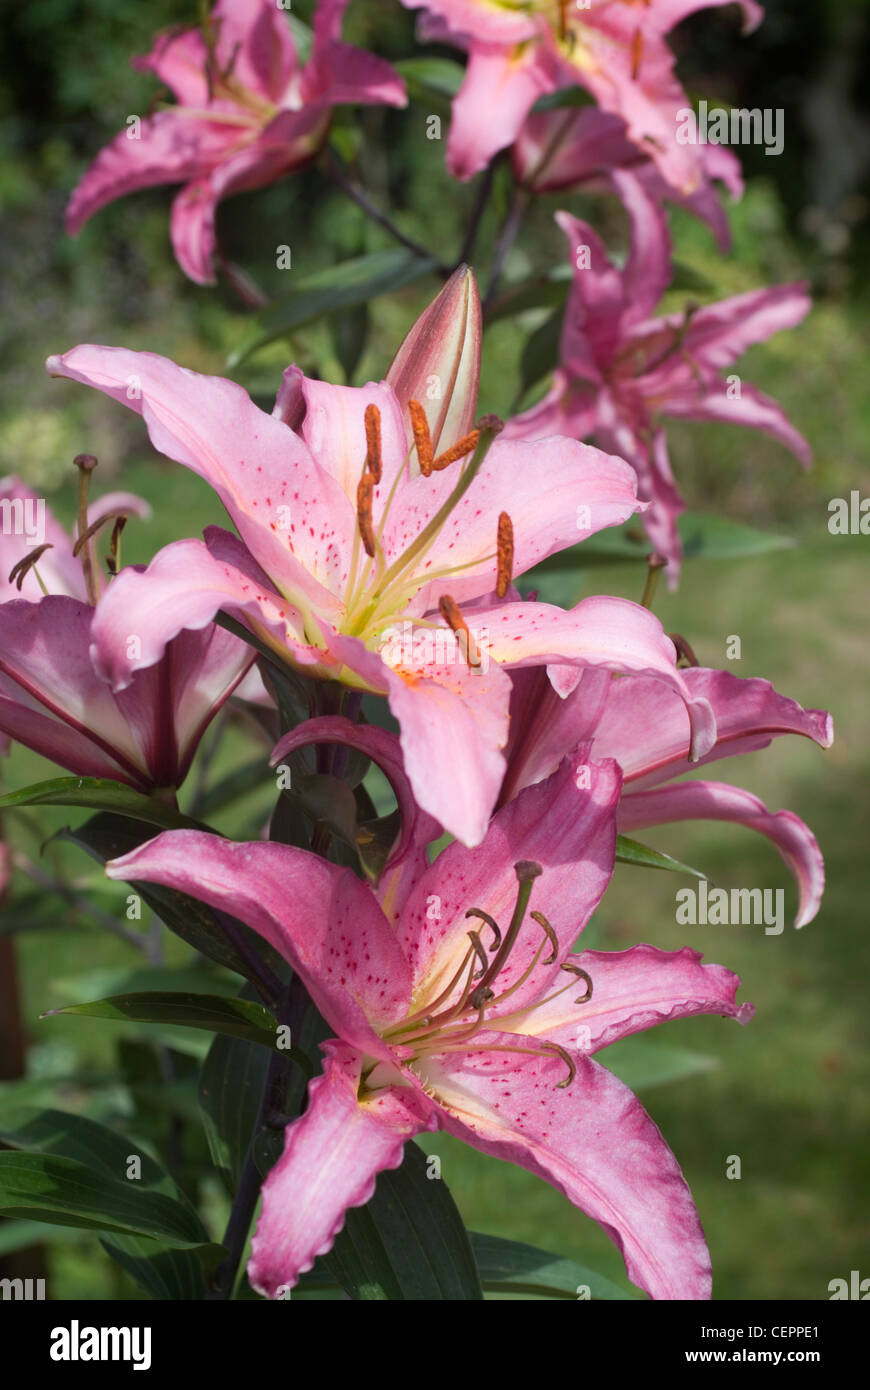 Pink oriental lilies in garden Stock Photo - Alamy